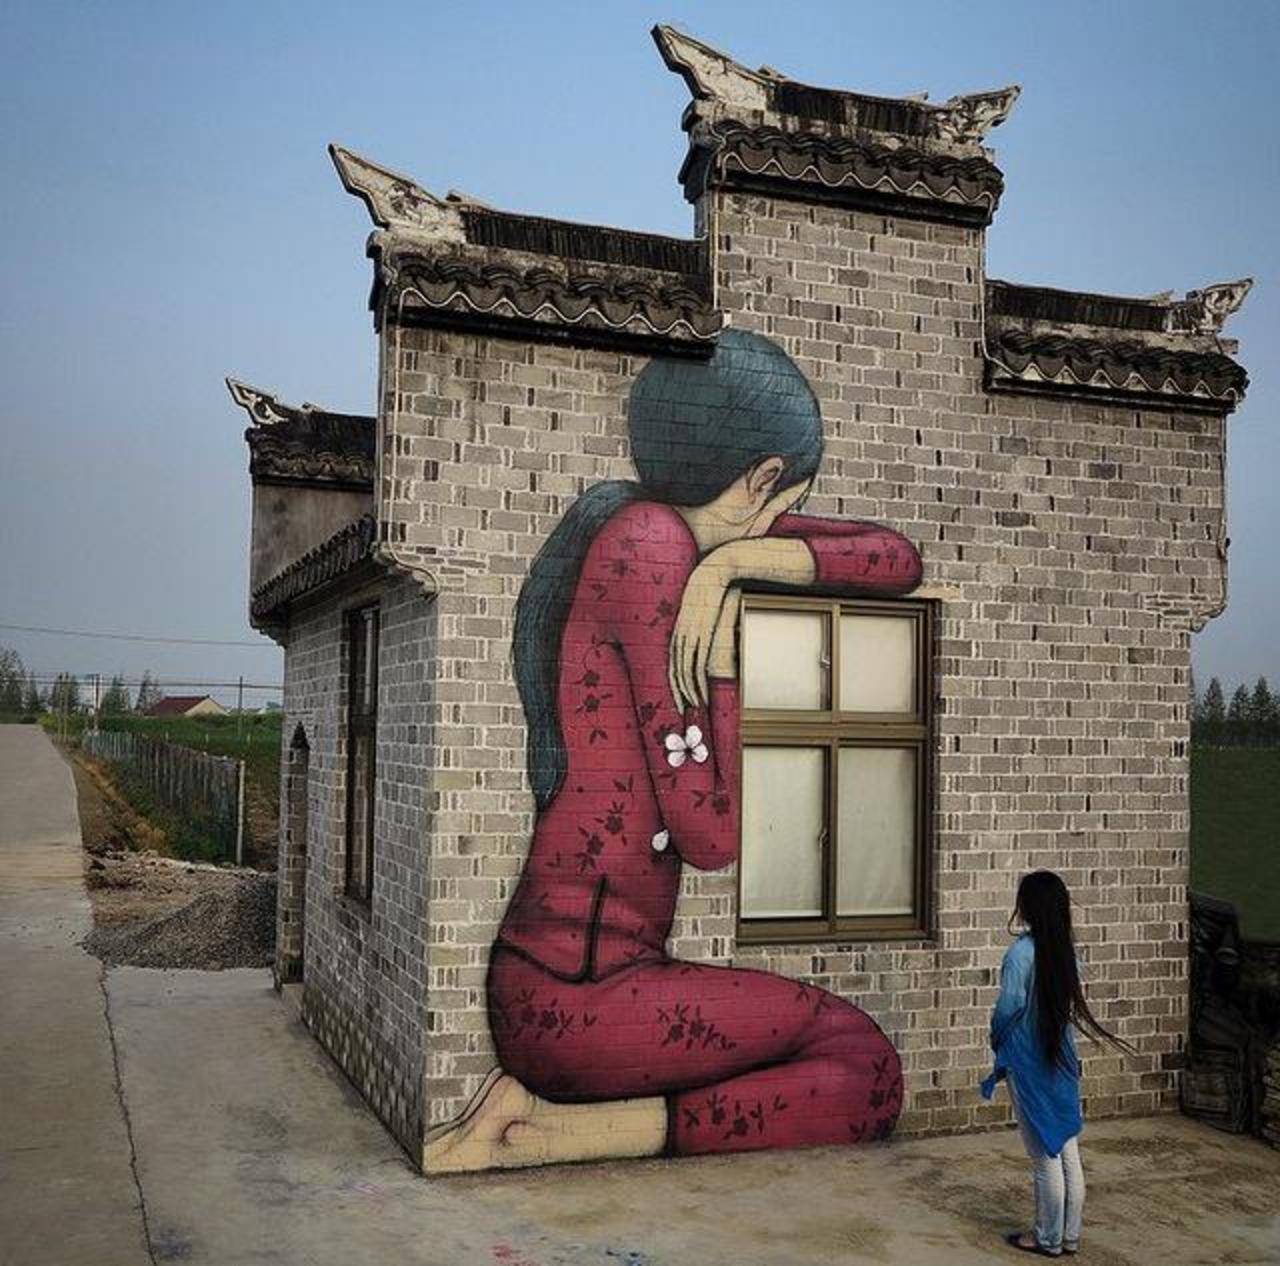 New Street Art by Seth Globepainter in Fengzing, China 

#art #arte #graffiti #streetart http://t.co/mQNZ57ic8G